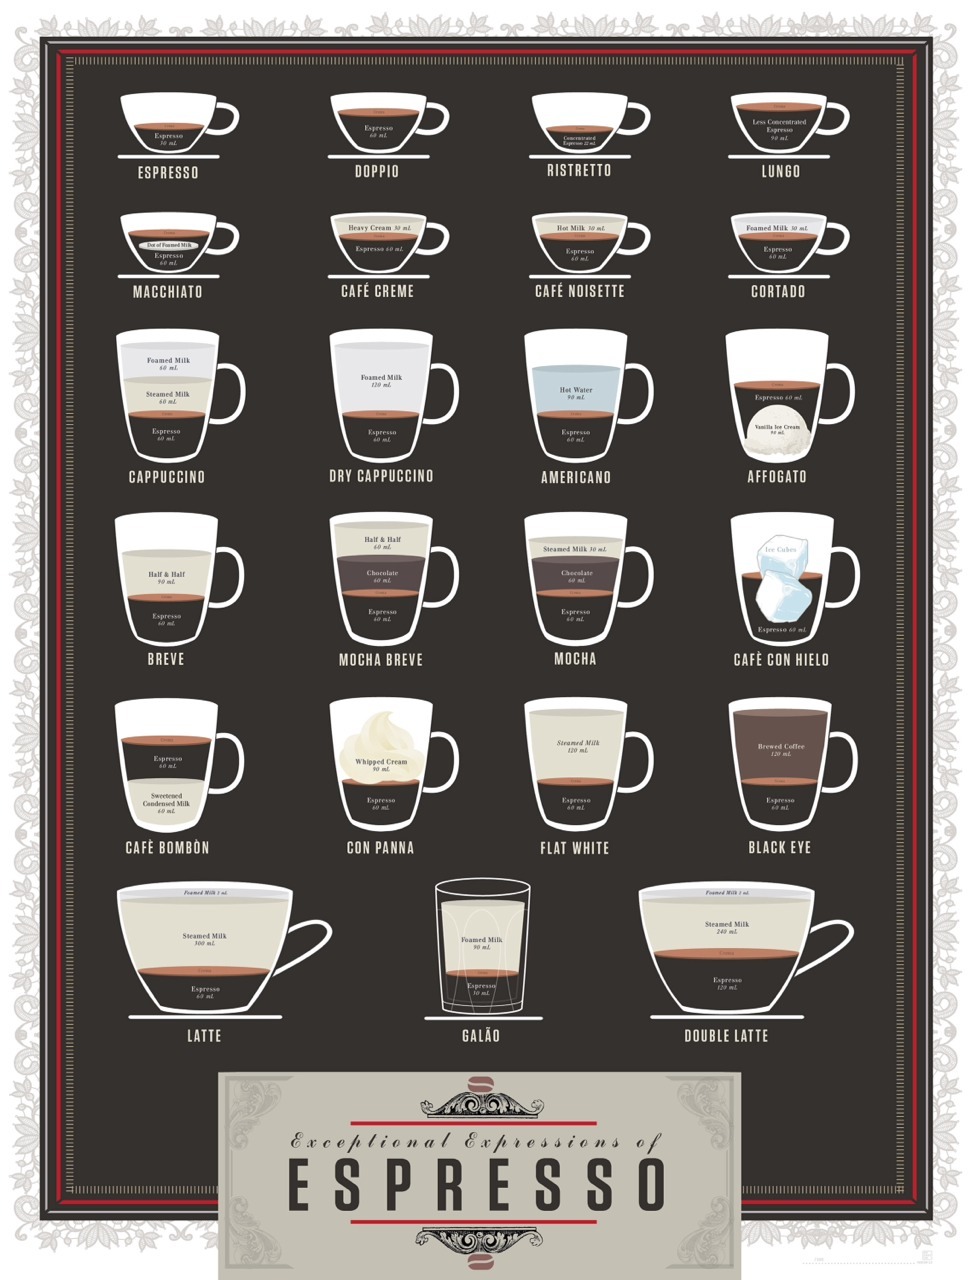 Espresso drinks chart